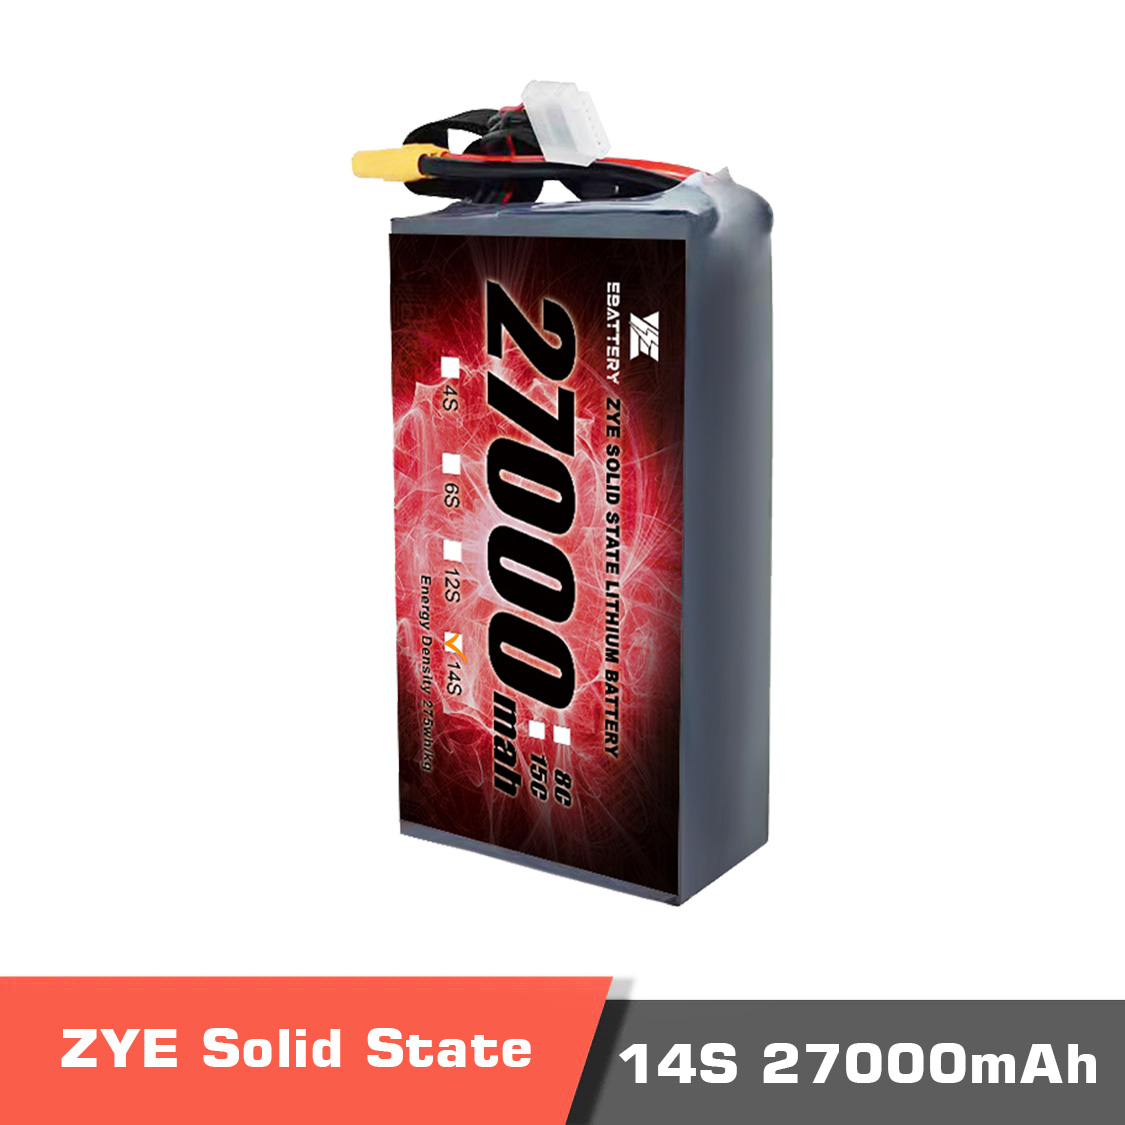 ZYE 27000 14s temp.1 - ZYE Power Ultra HV Semi Solid-State Battery,Ultra HV Semi Solid-State Battery,4S 10000mAh high voltage LiPo Battery,4S 10000mAh HV LiPo Battery,Solid-state LiPo battery,lipo battery,drone battery,14s battery,high energy density battery,UAV,drone,vtol,ZYE Power,ZYE power Battery - MotioNew - 1